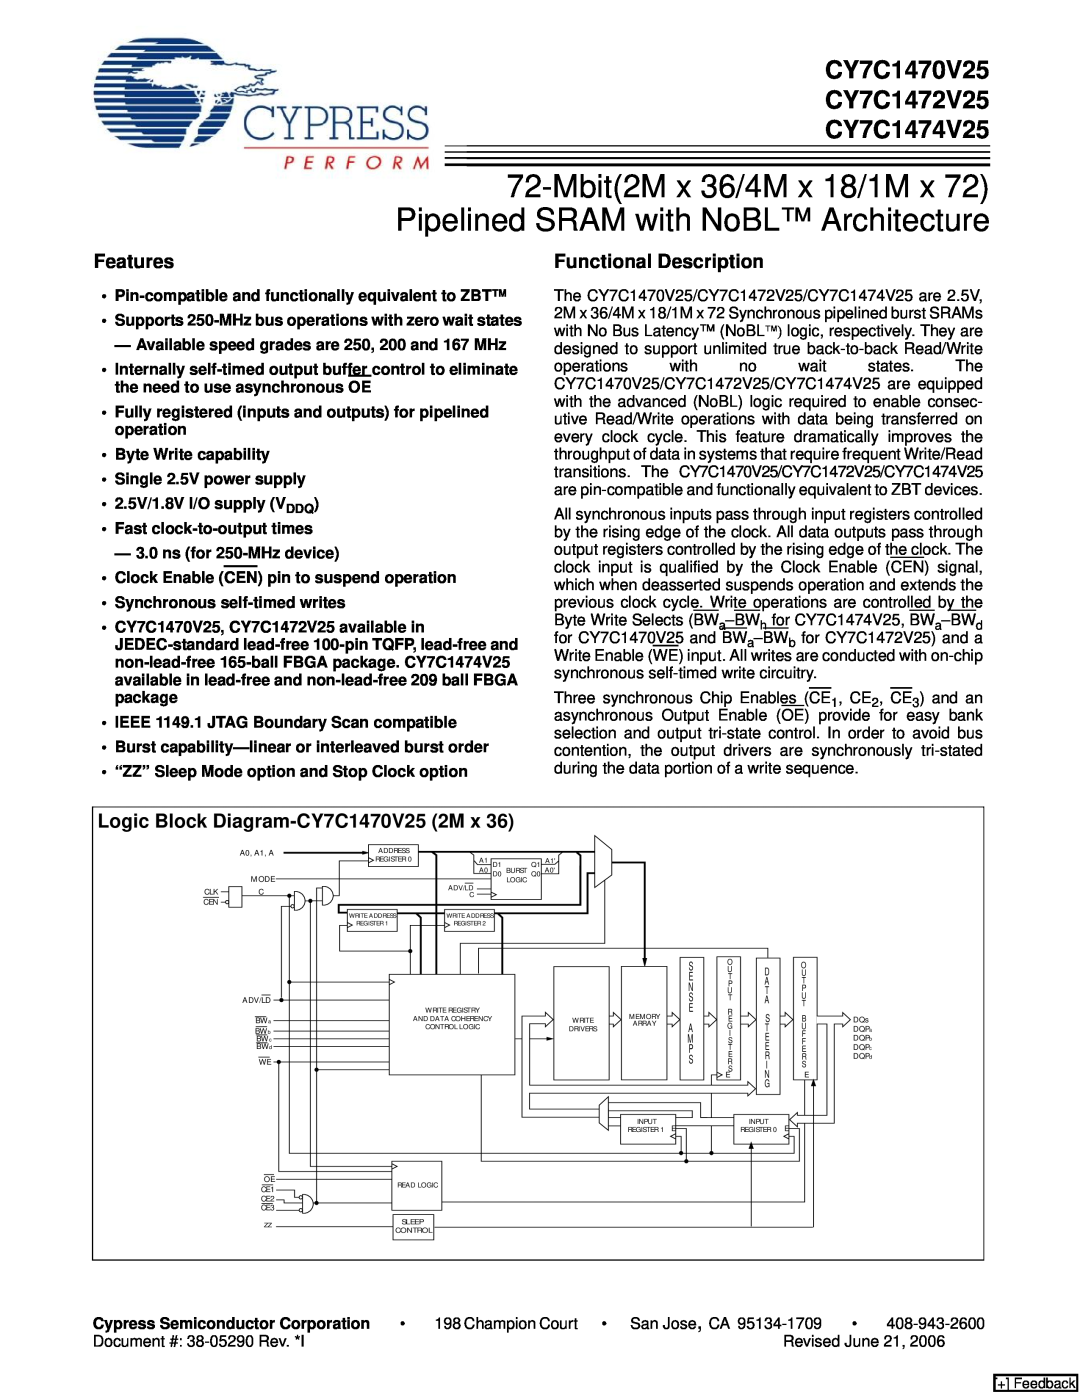 Cypress manual CY7C1470V25 CY7C1472V25 CY7C1474V25, Features, Functional Description 